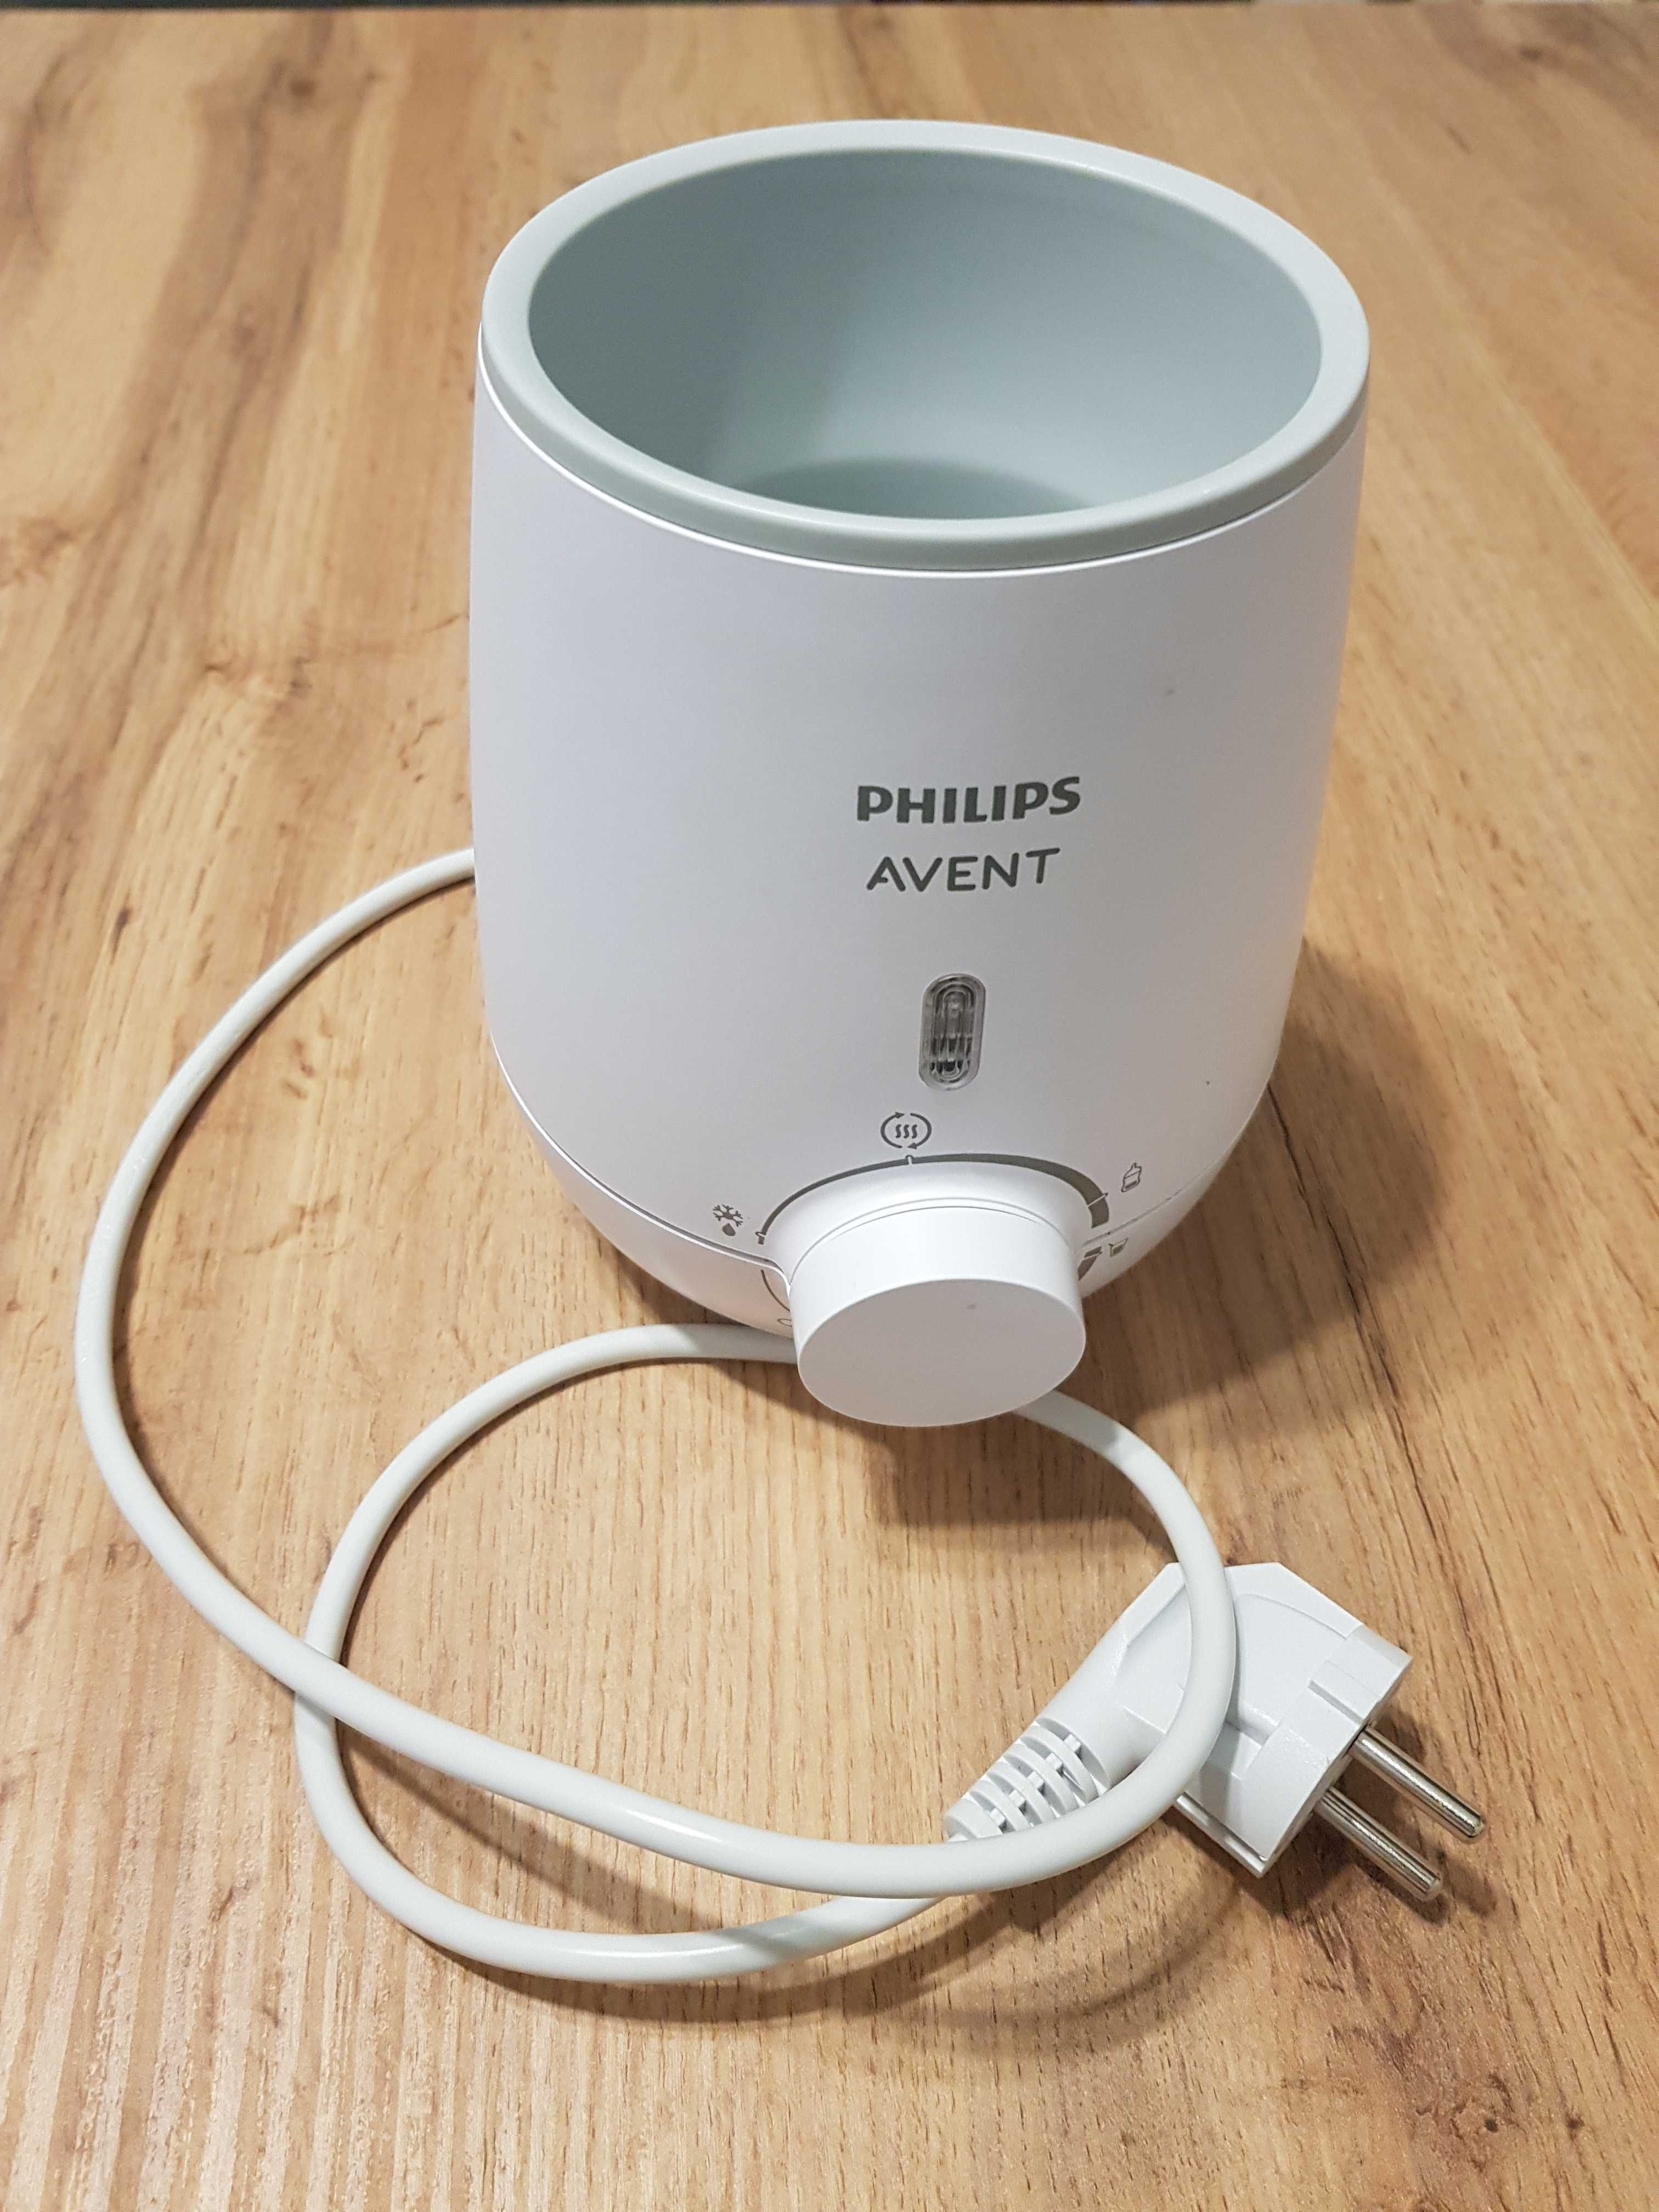 Philips Avent aparat de incalzit biberoane - 80 lei